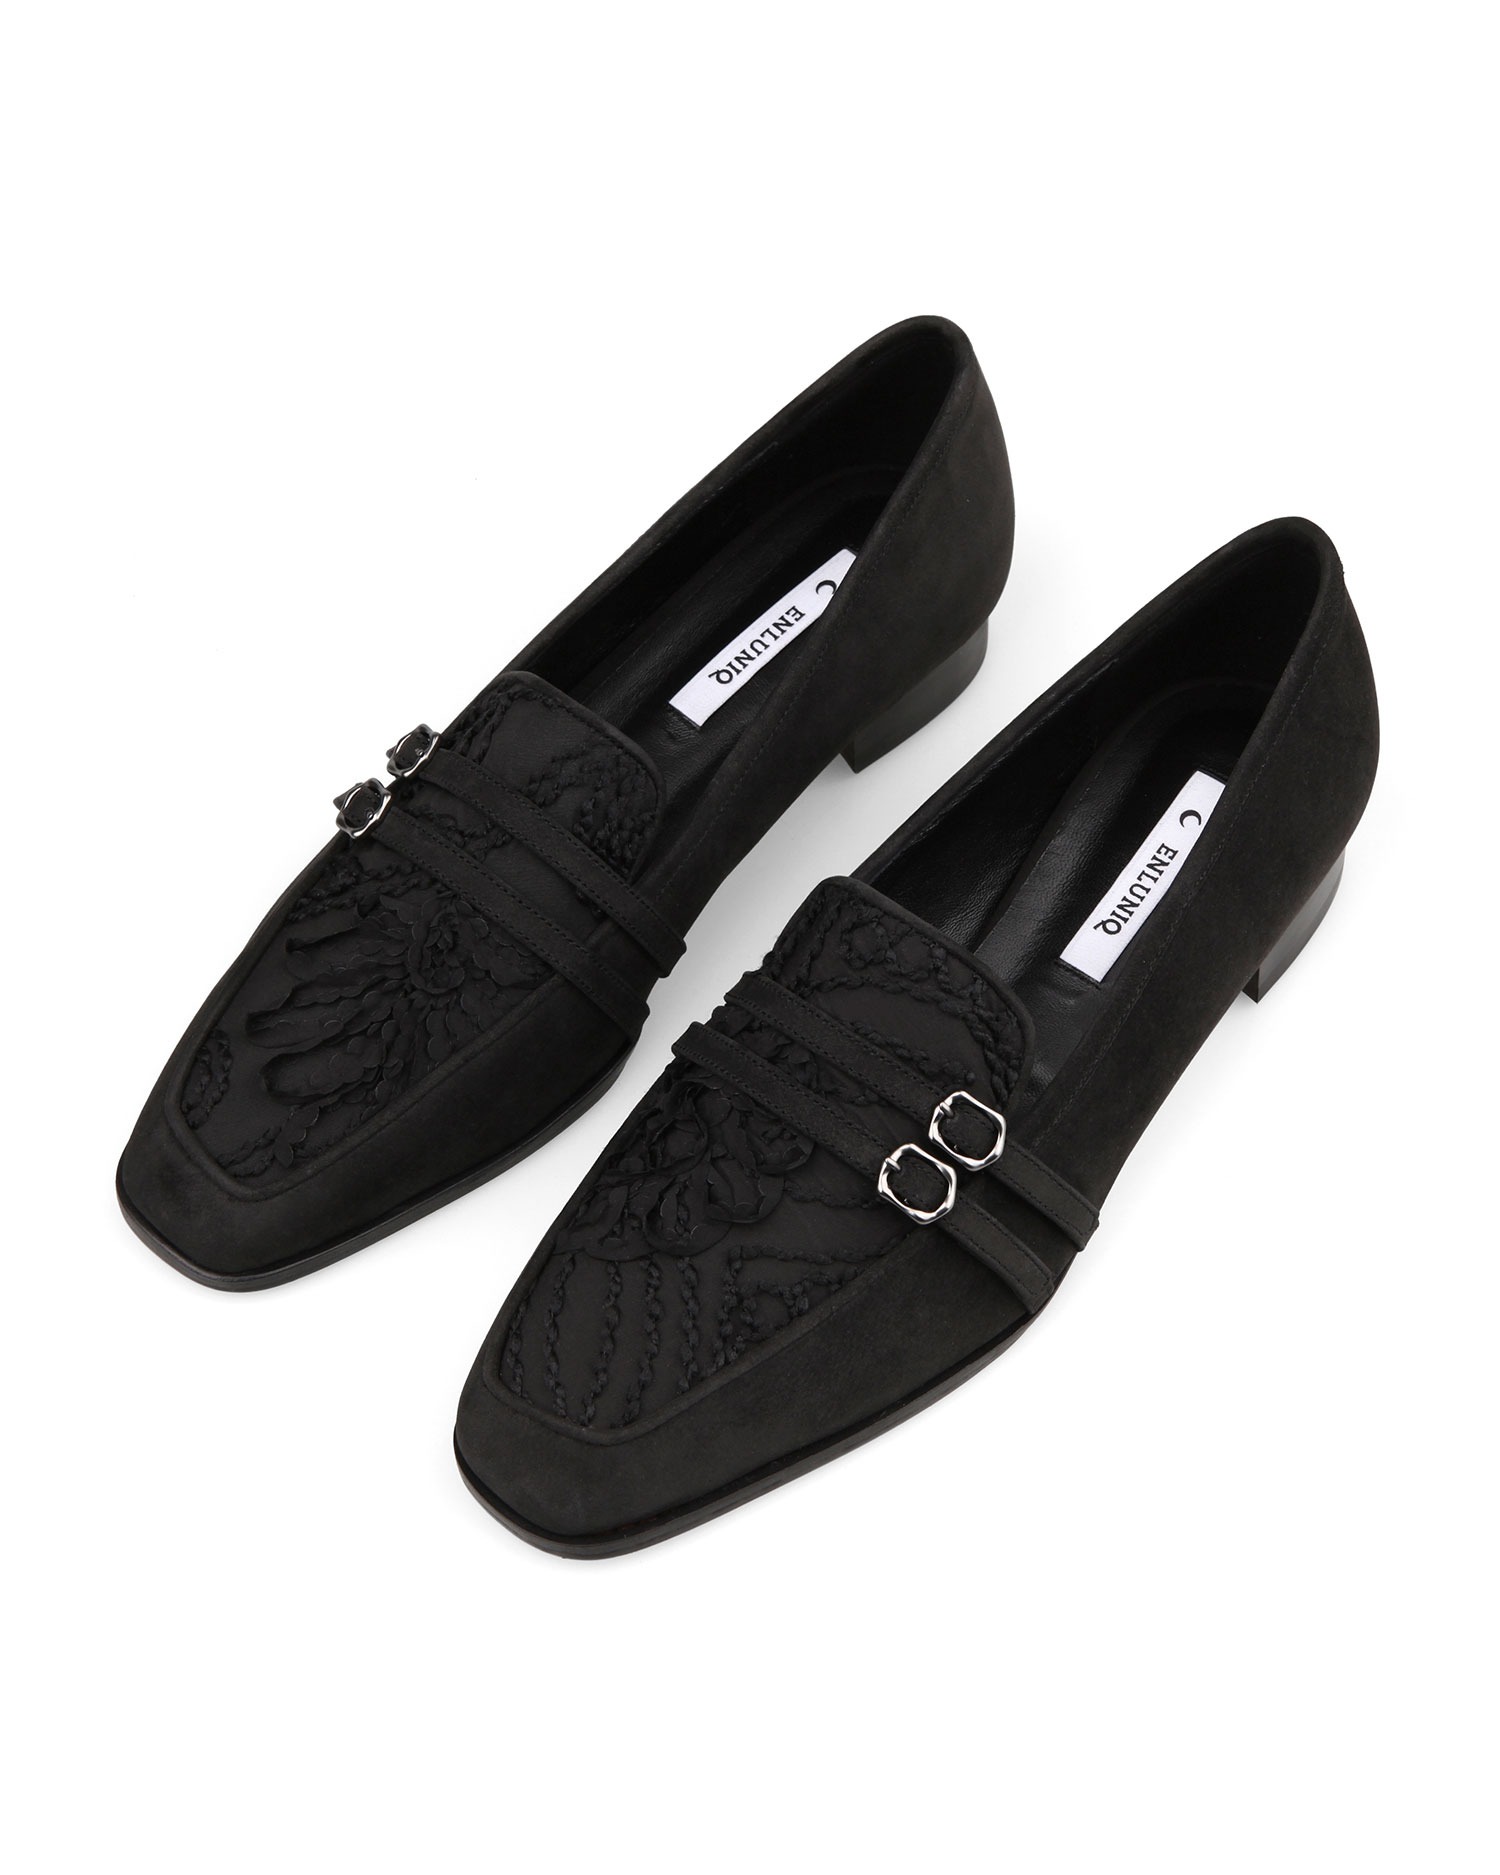 Odd Loafers in Petals - Black